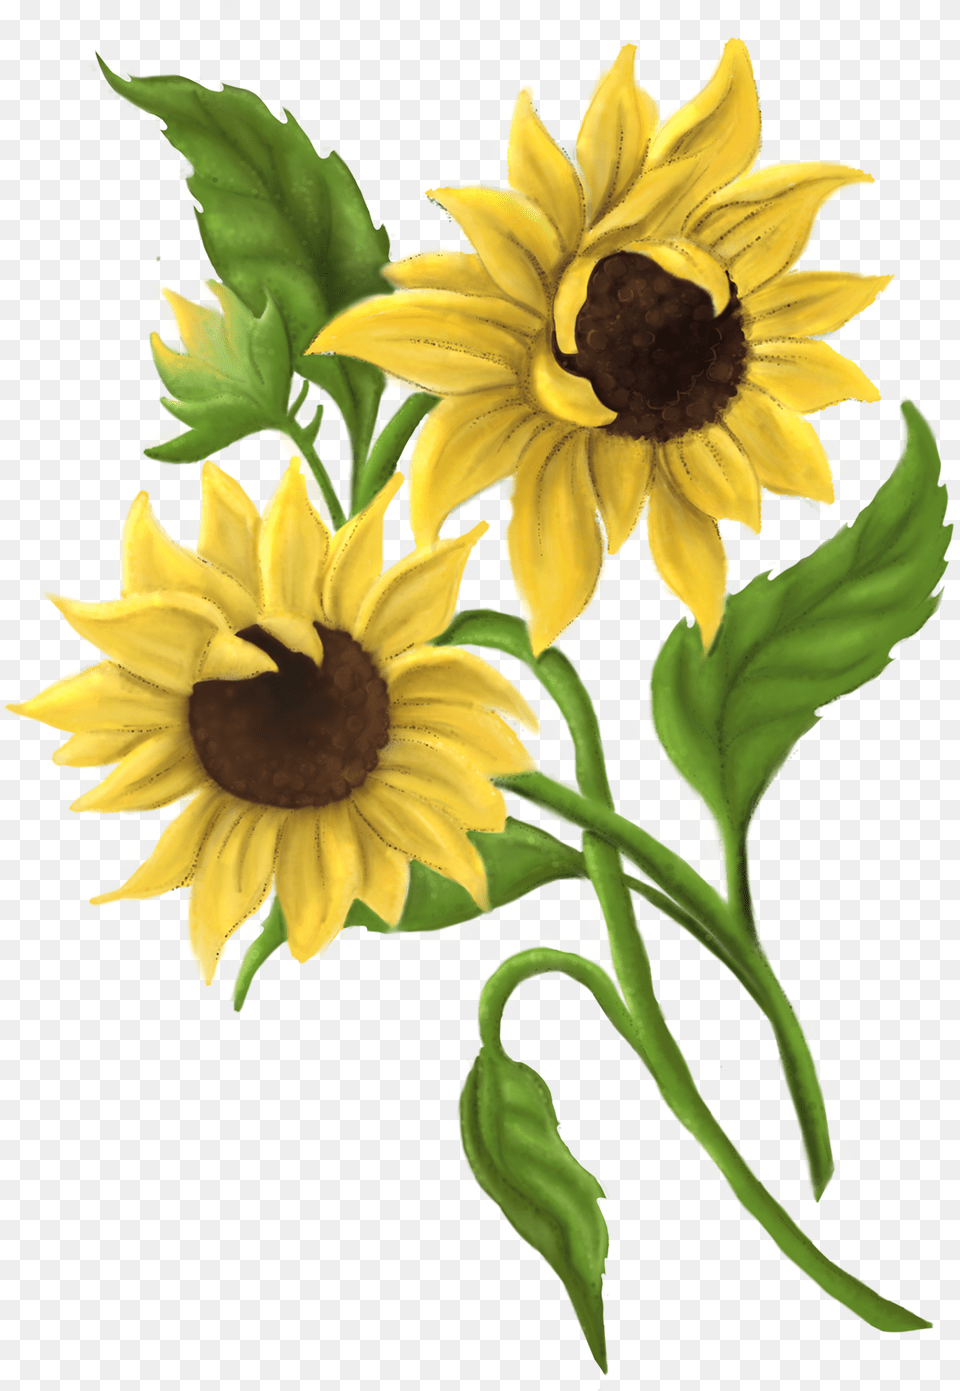 Black Eyed Susan, Flower, Plant, Sunflower, Daisy Png Image